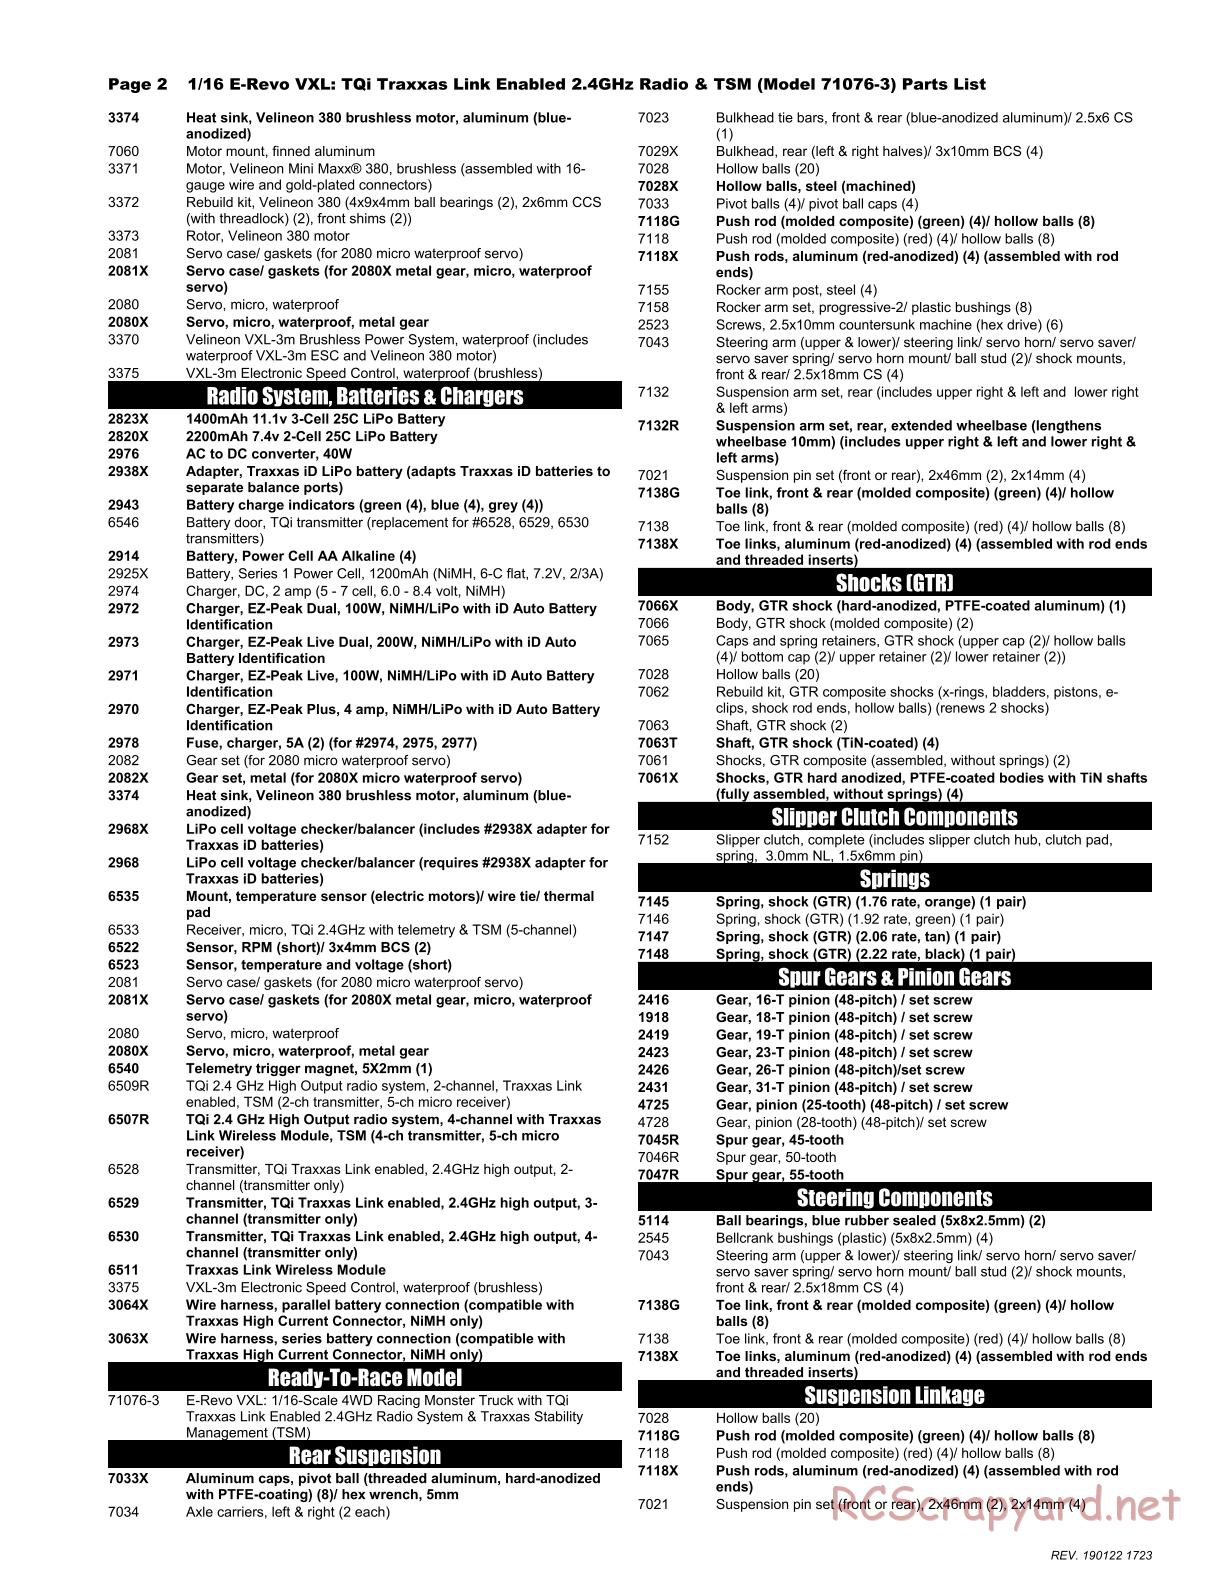 Traxxas - 1/16 E-Revo VXL TSM - Parts List - Page 2